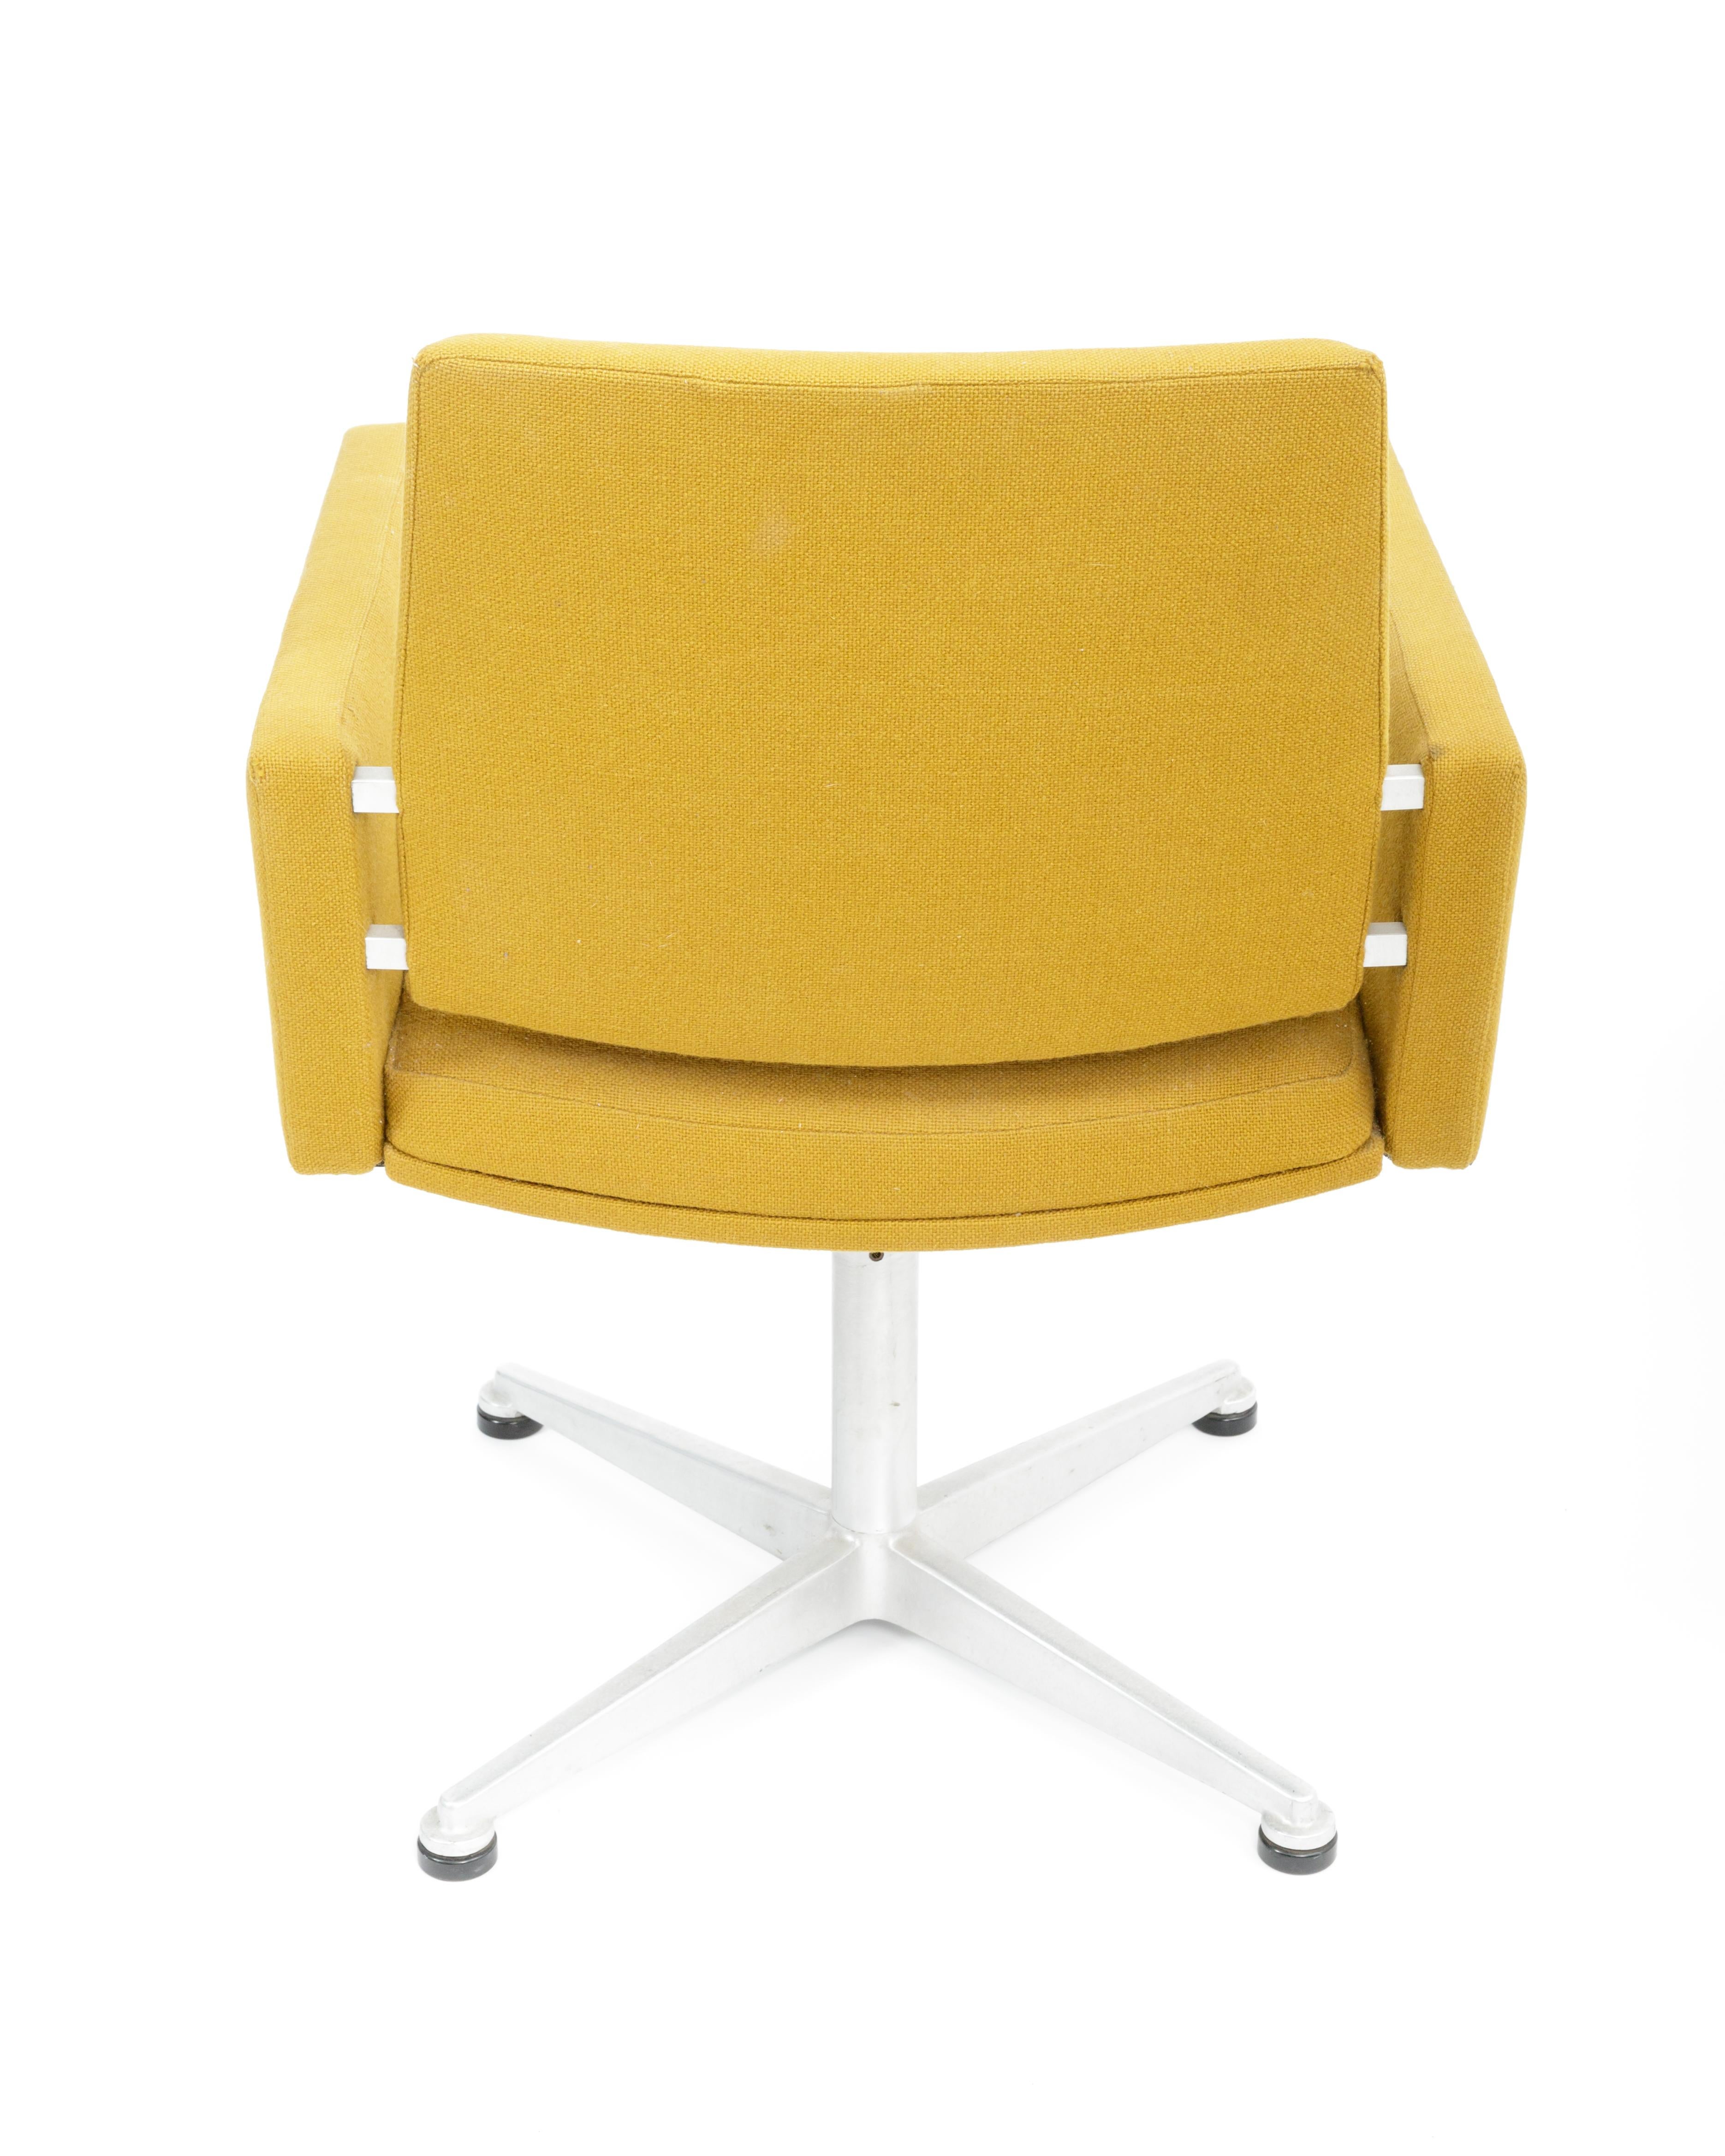 yellow desk chair